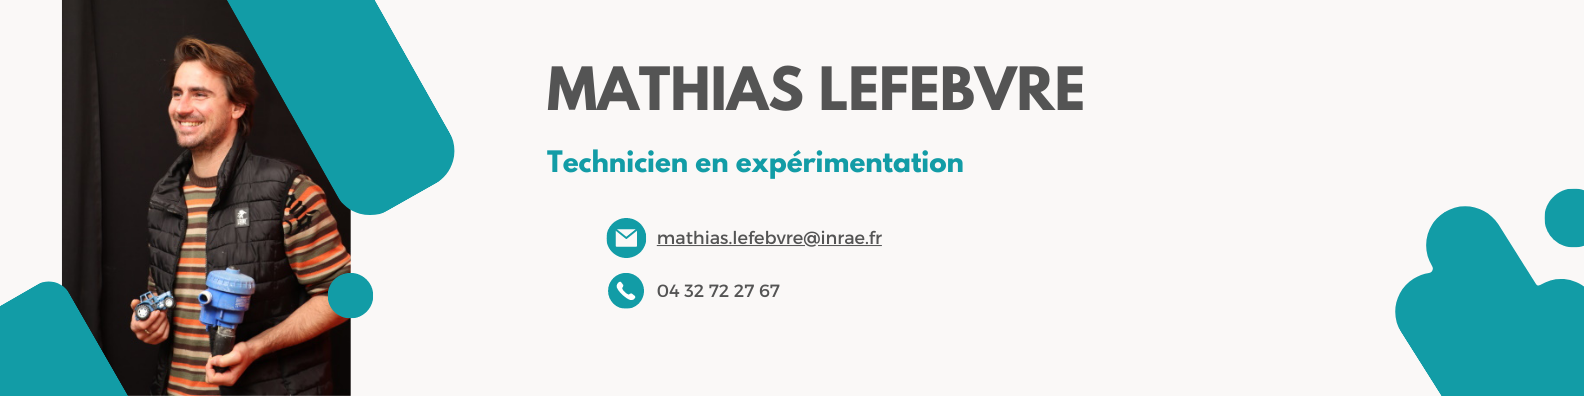 Mathias Lefebvre.png